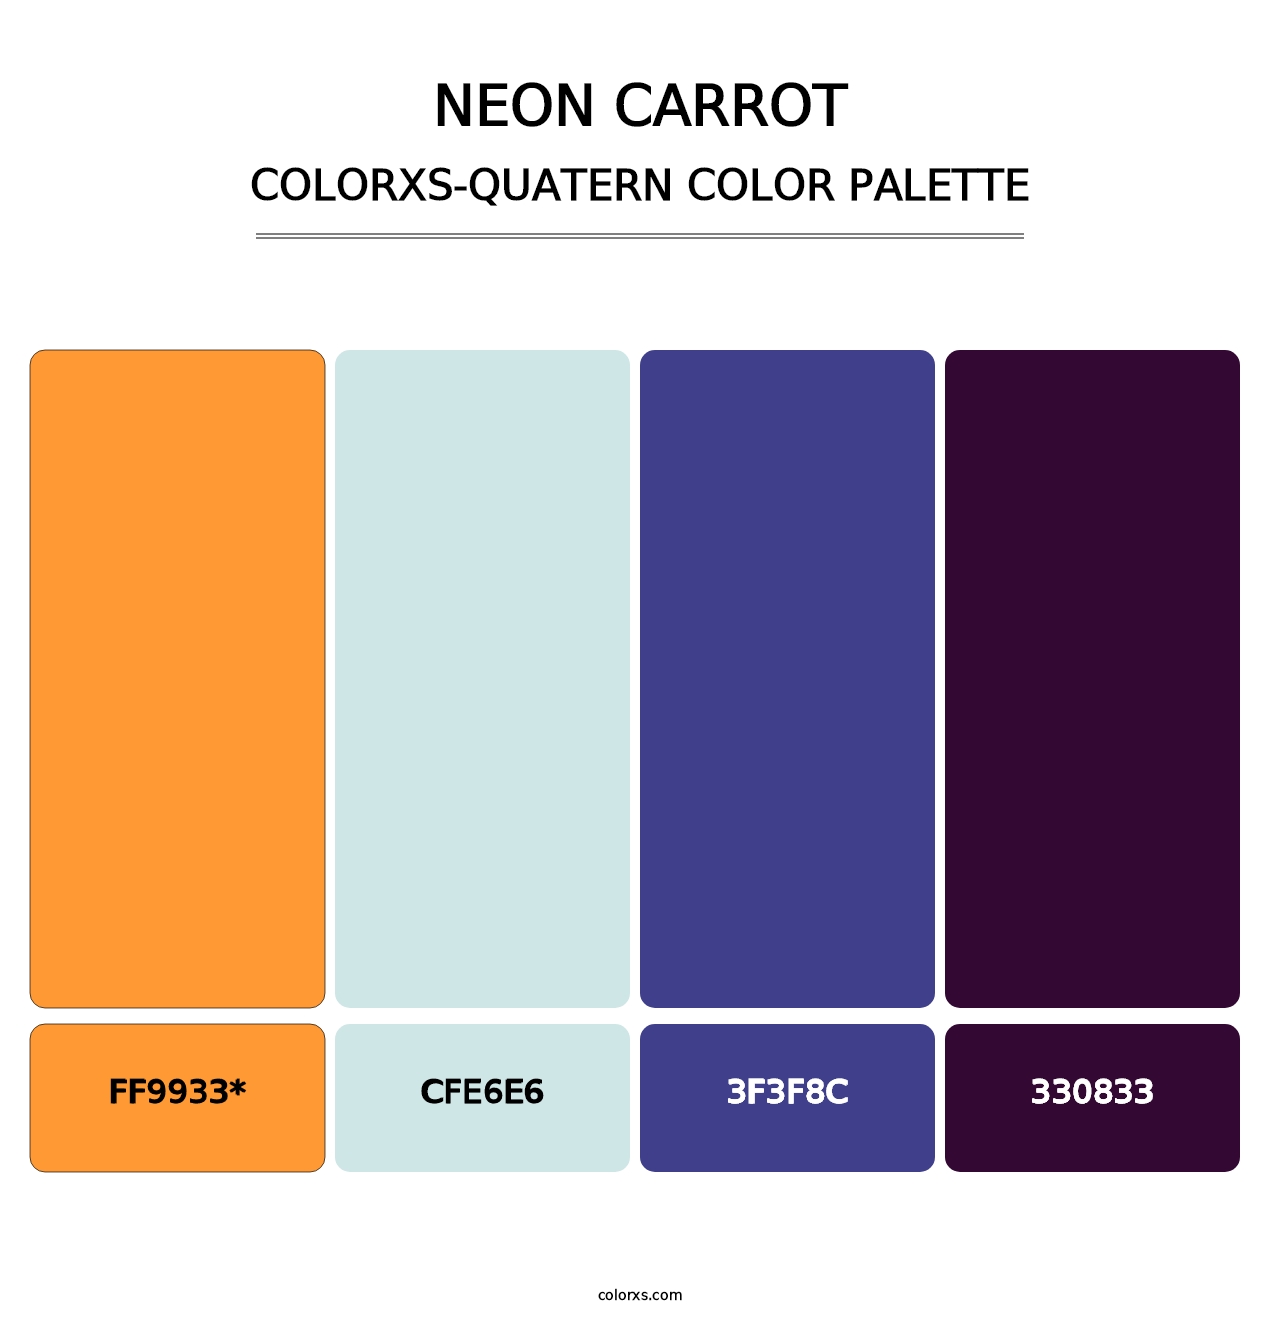 Neon Carrot - Colorxs Quatern Palette